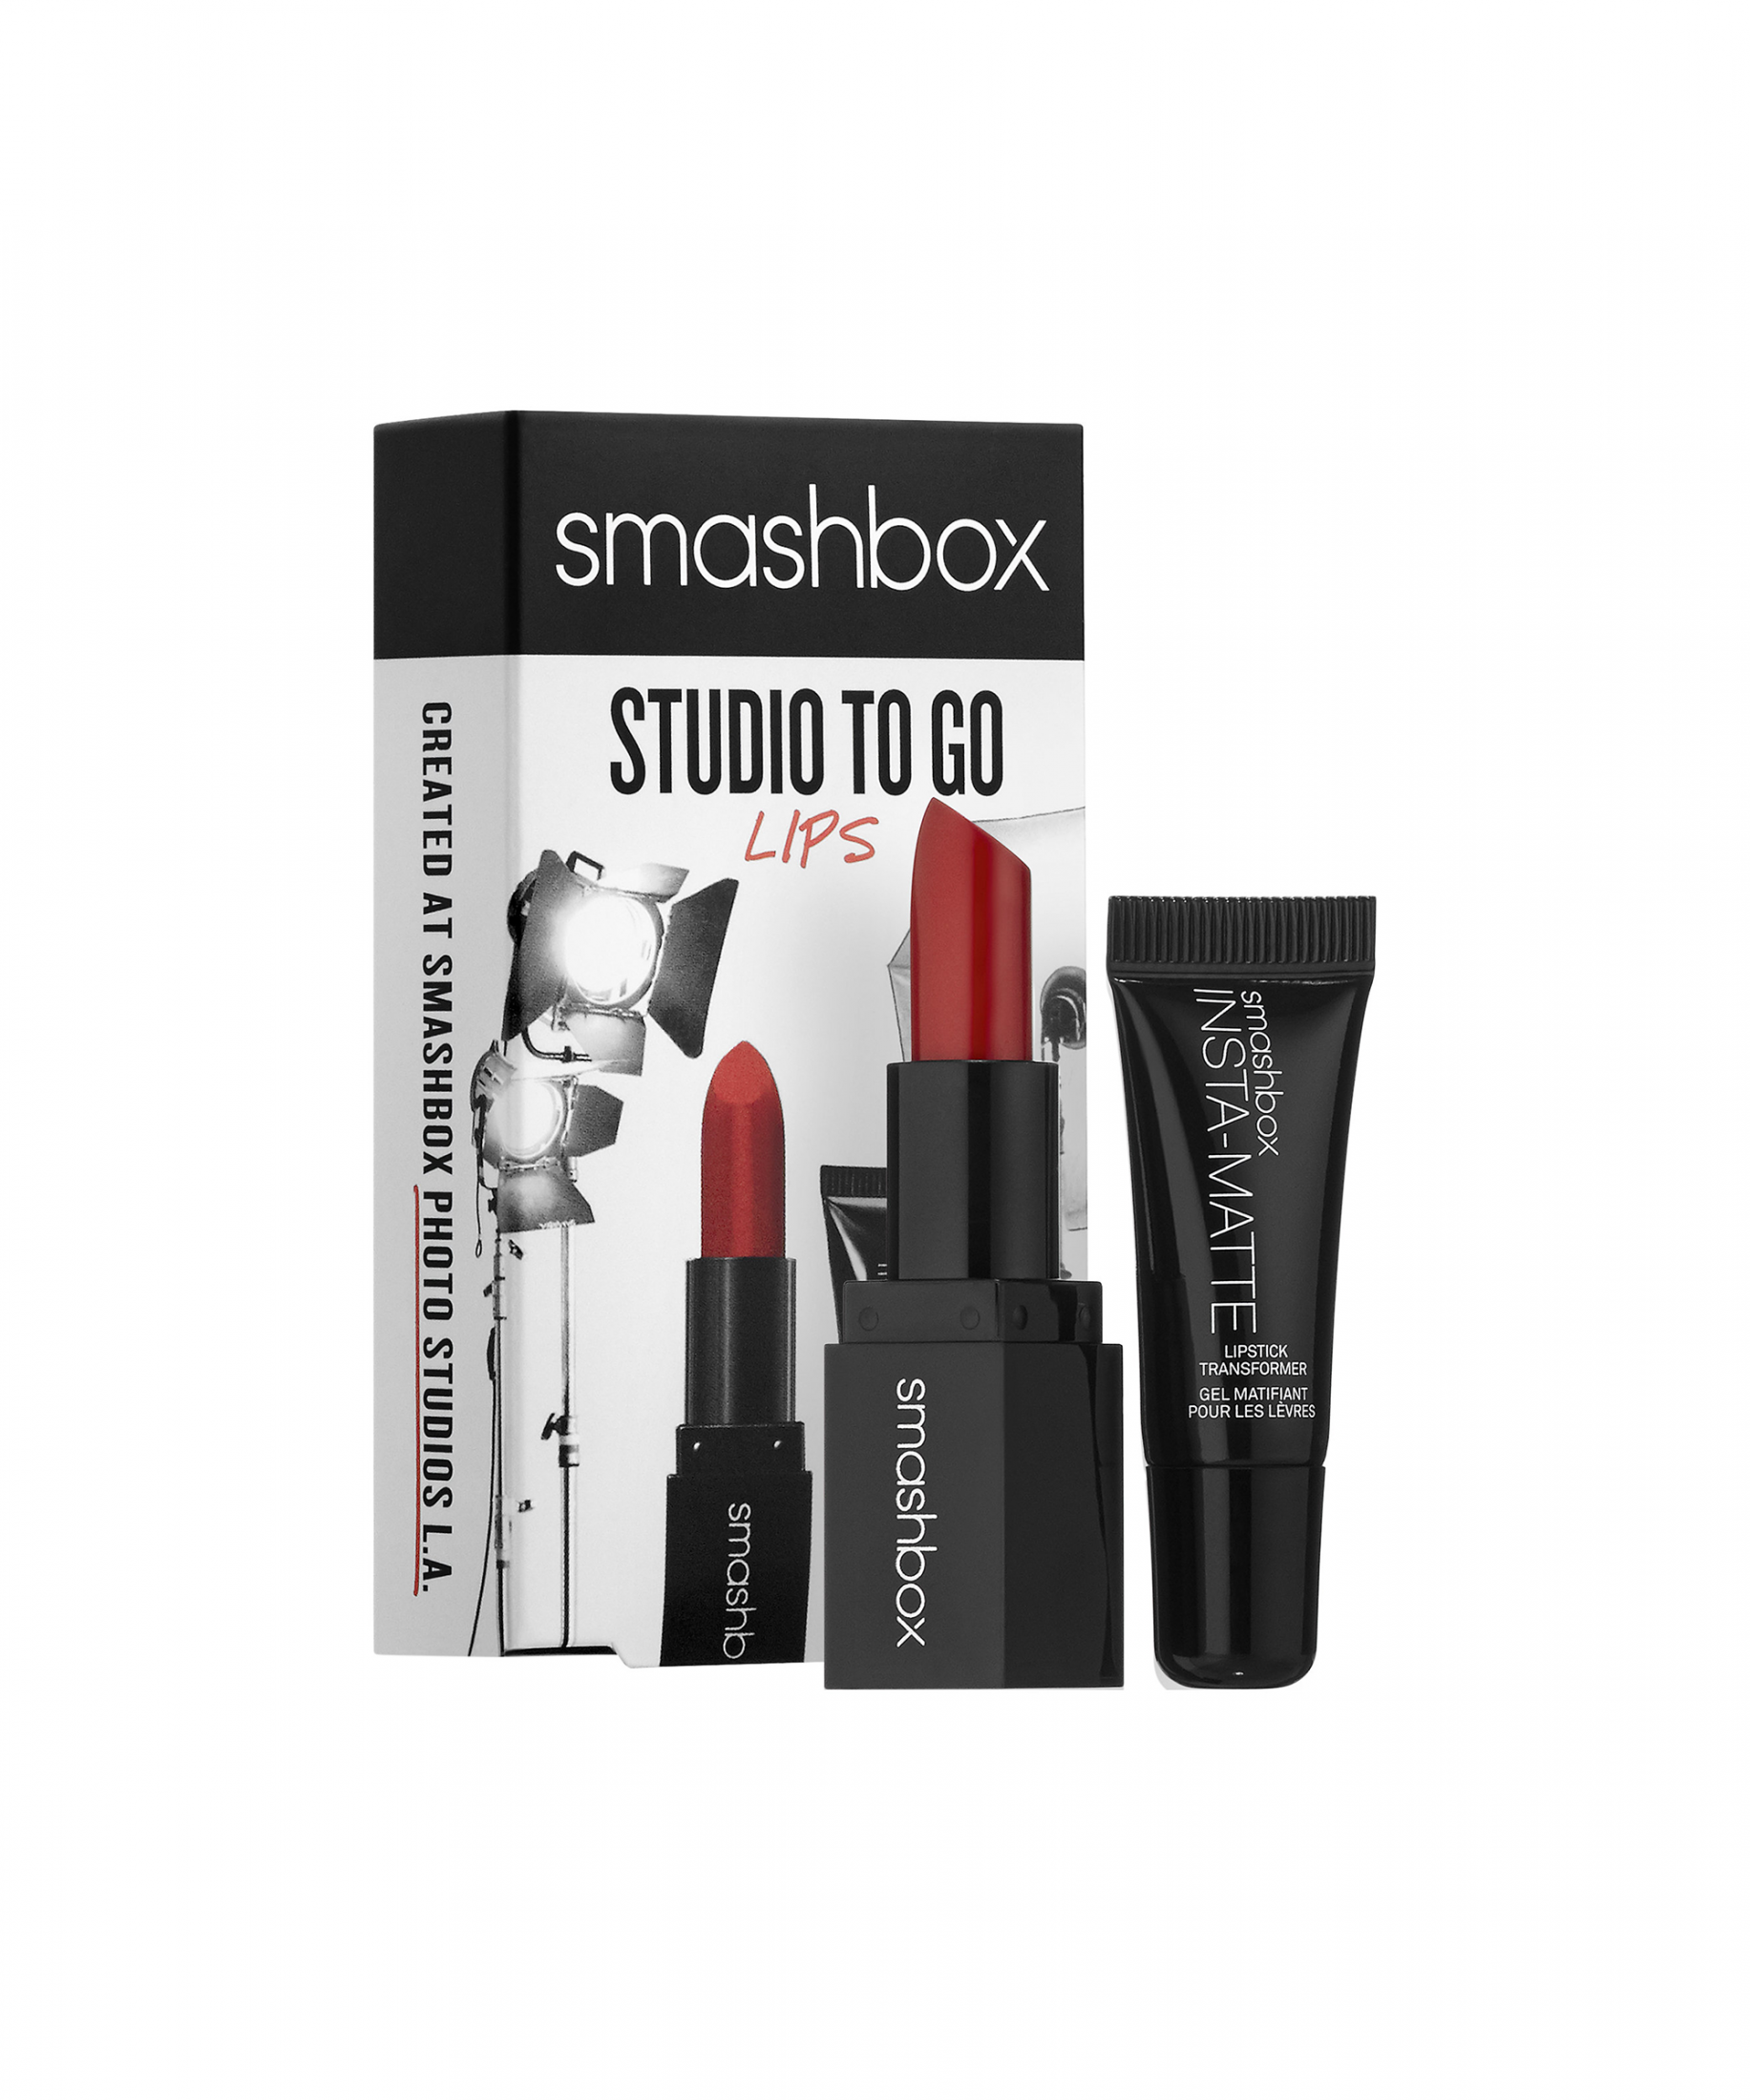 Smashbox Studio To Go Lips Set £9.66 